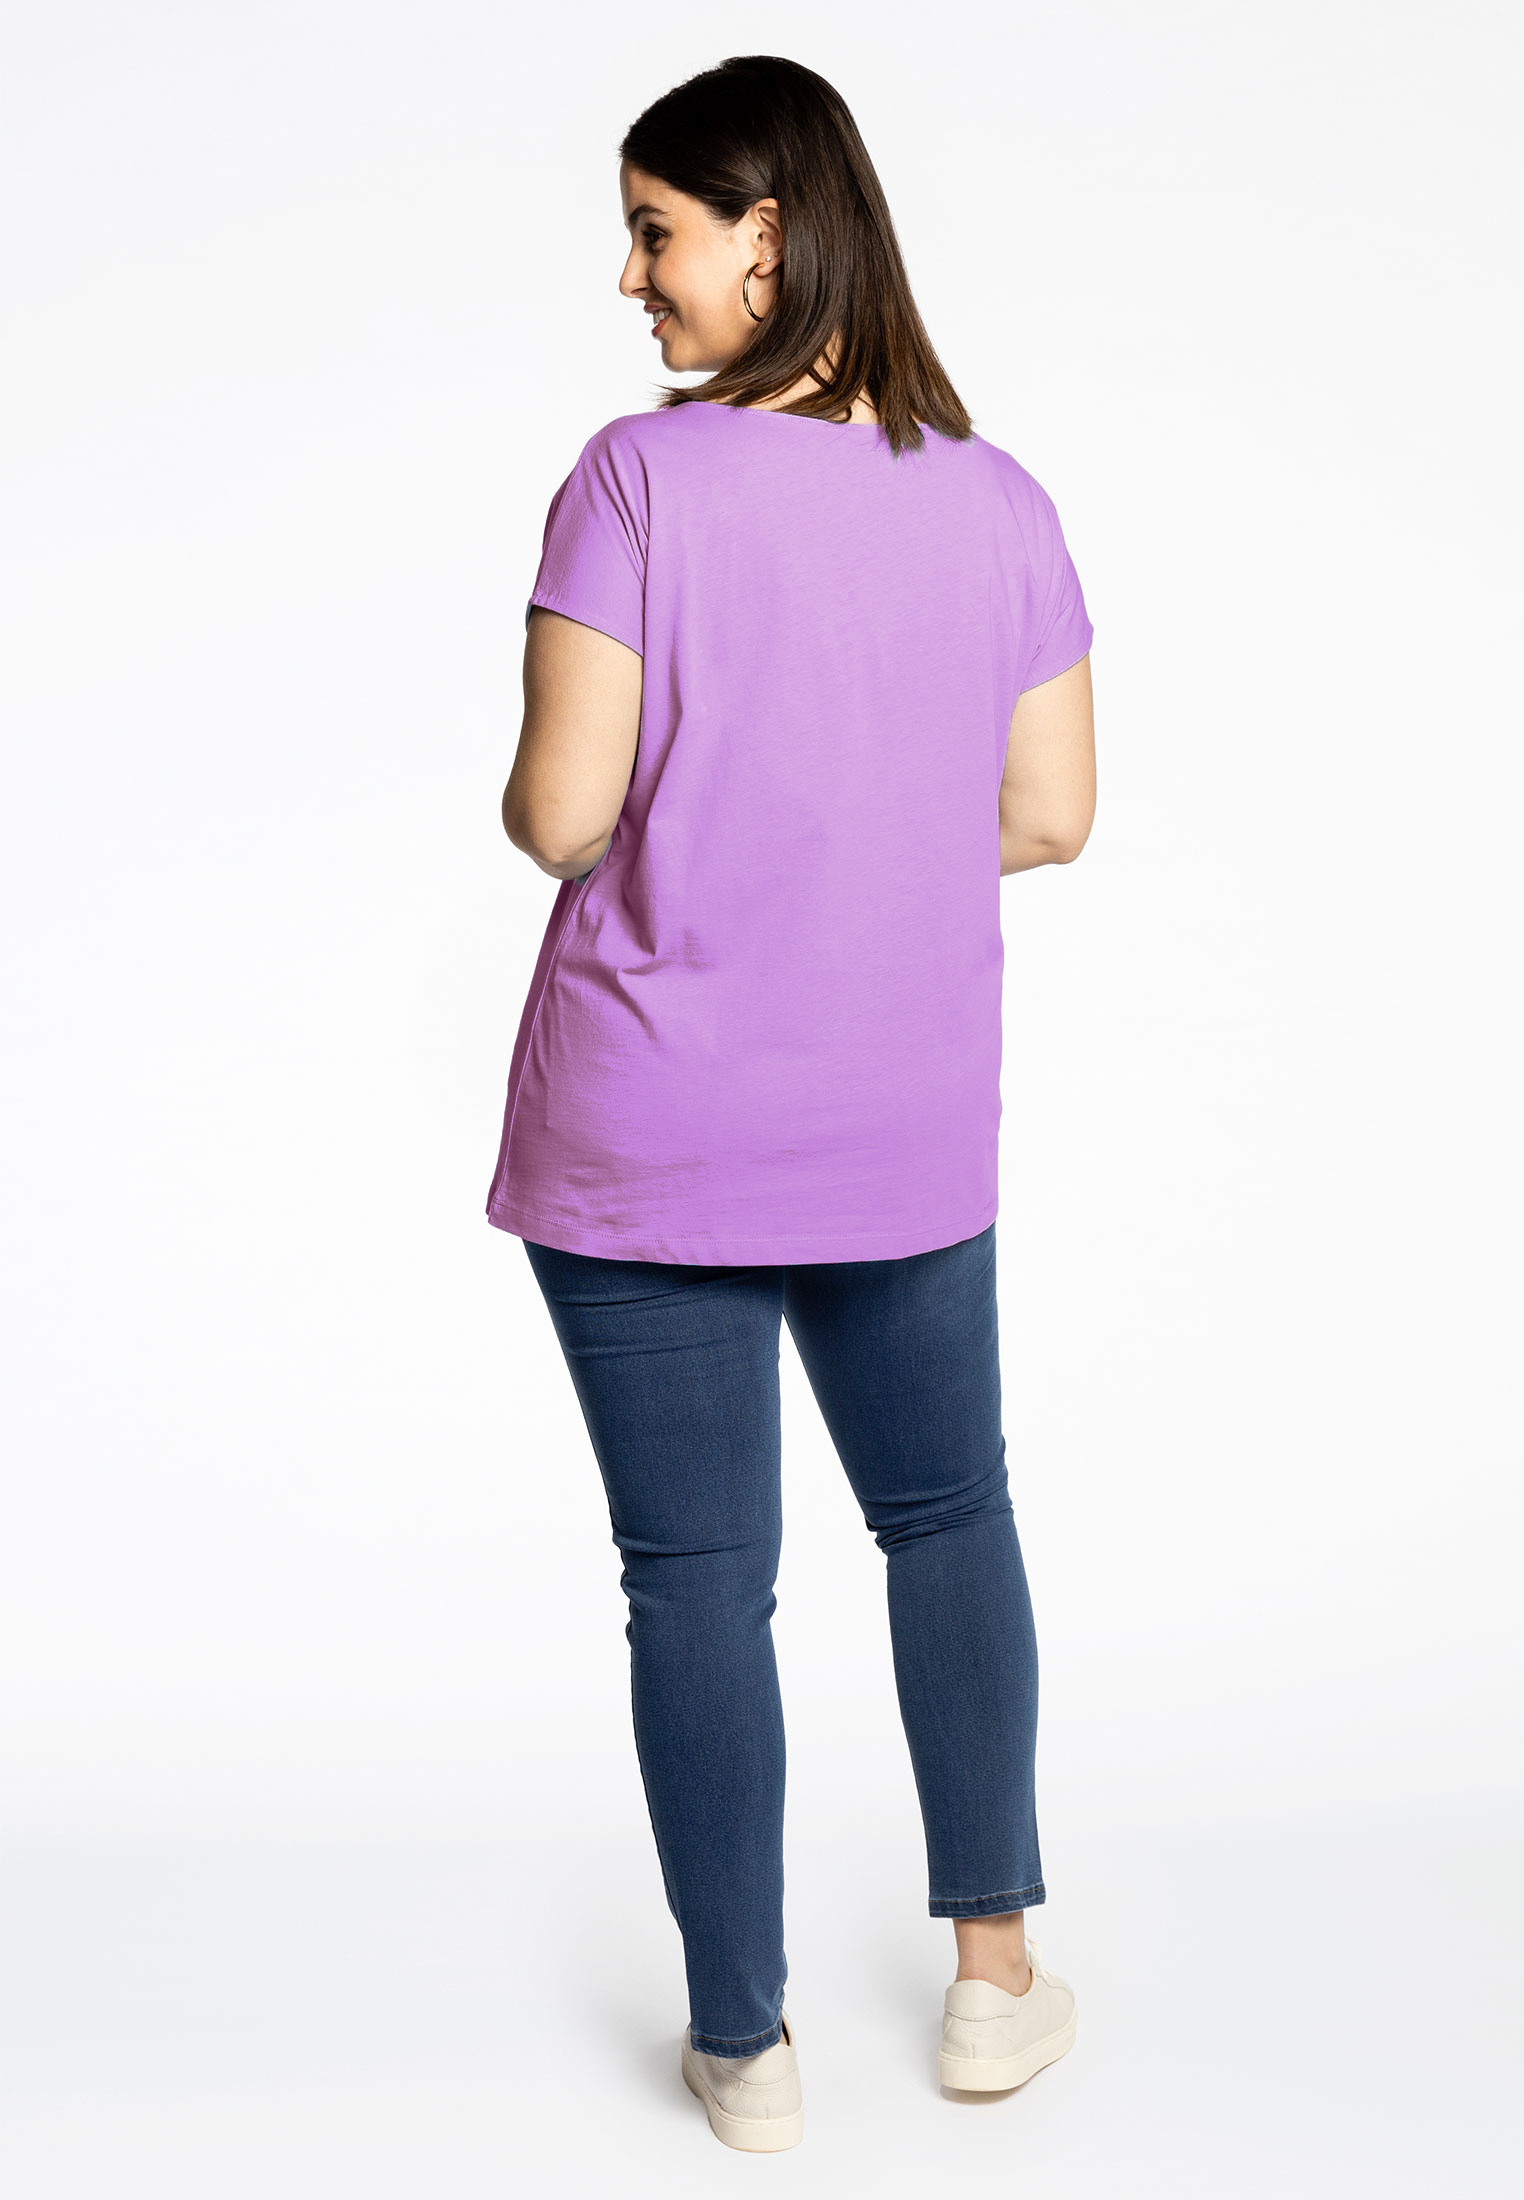 Basic T-shirt cap sleeves COTTON - white black blue light blue red pink light purple